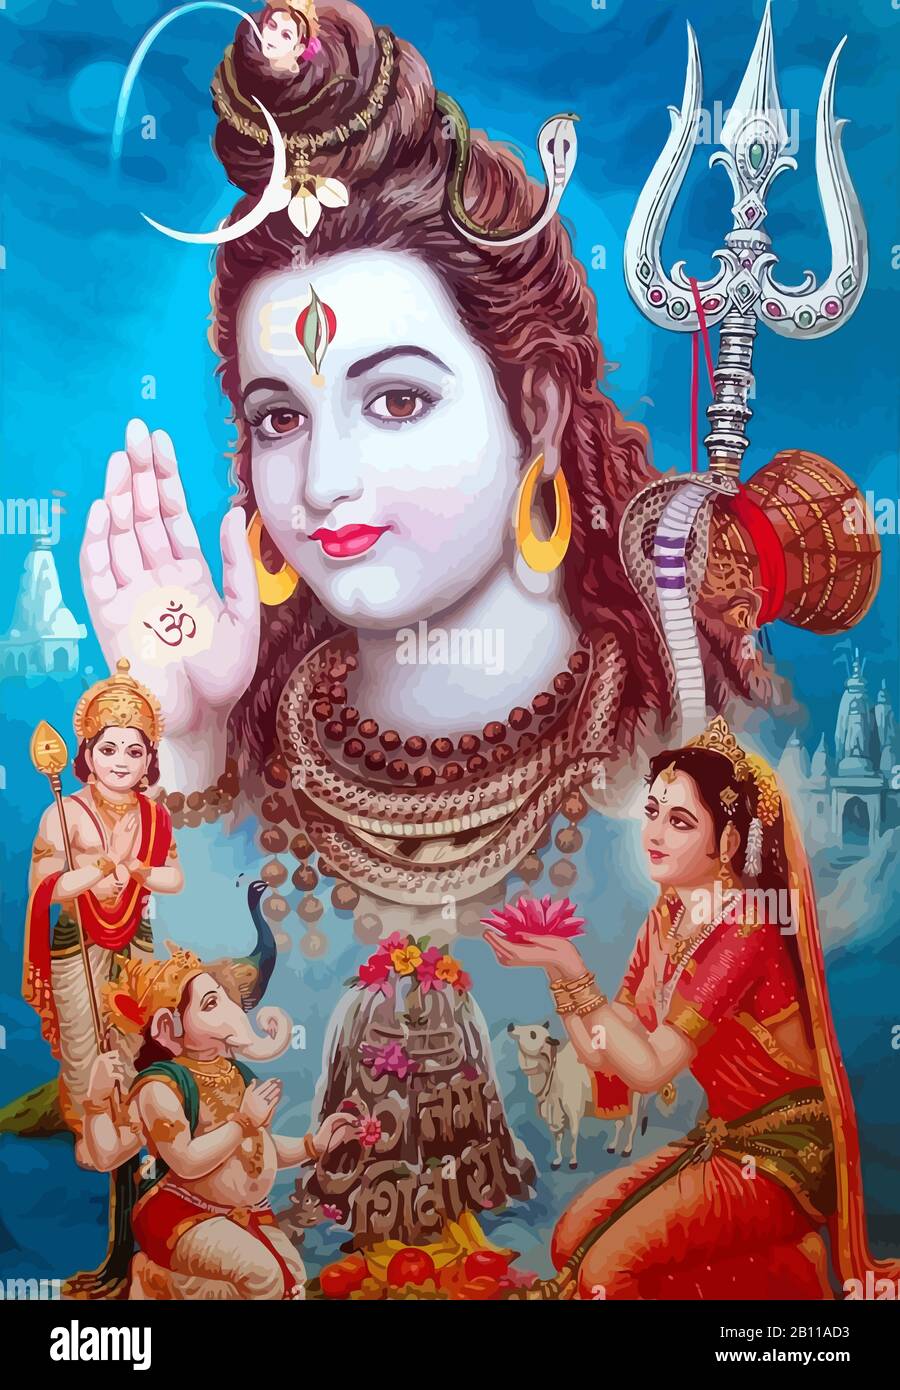 hinduism lord shiva ganesha spiritual illustration holy blue Stock ...